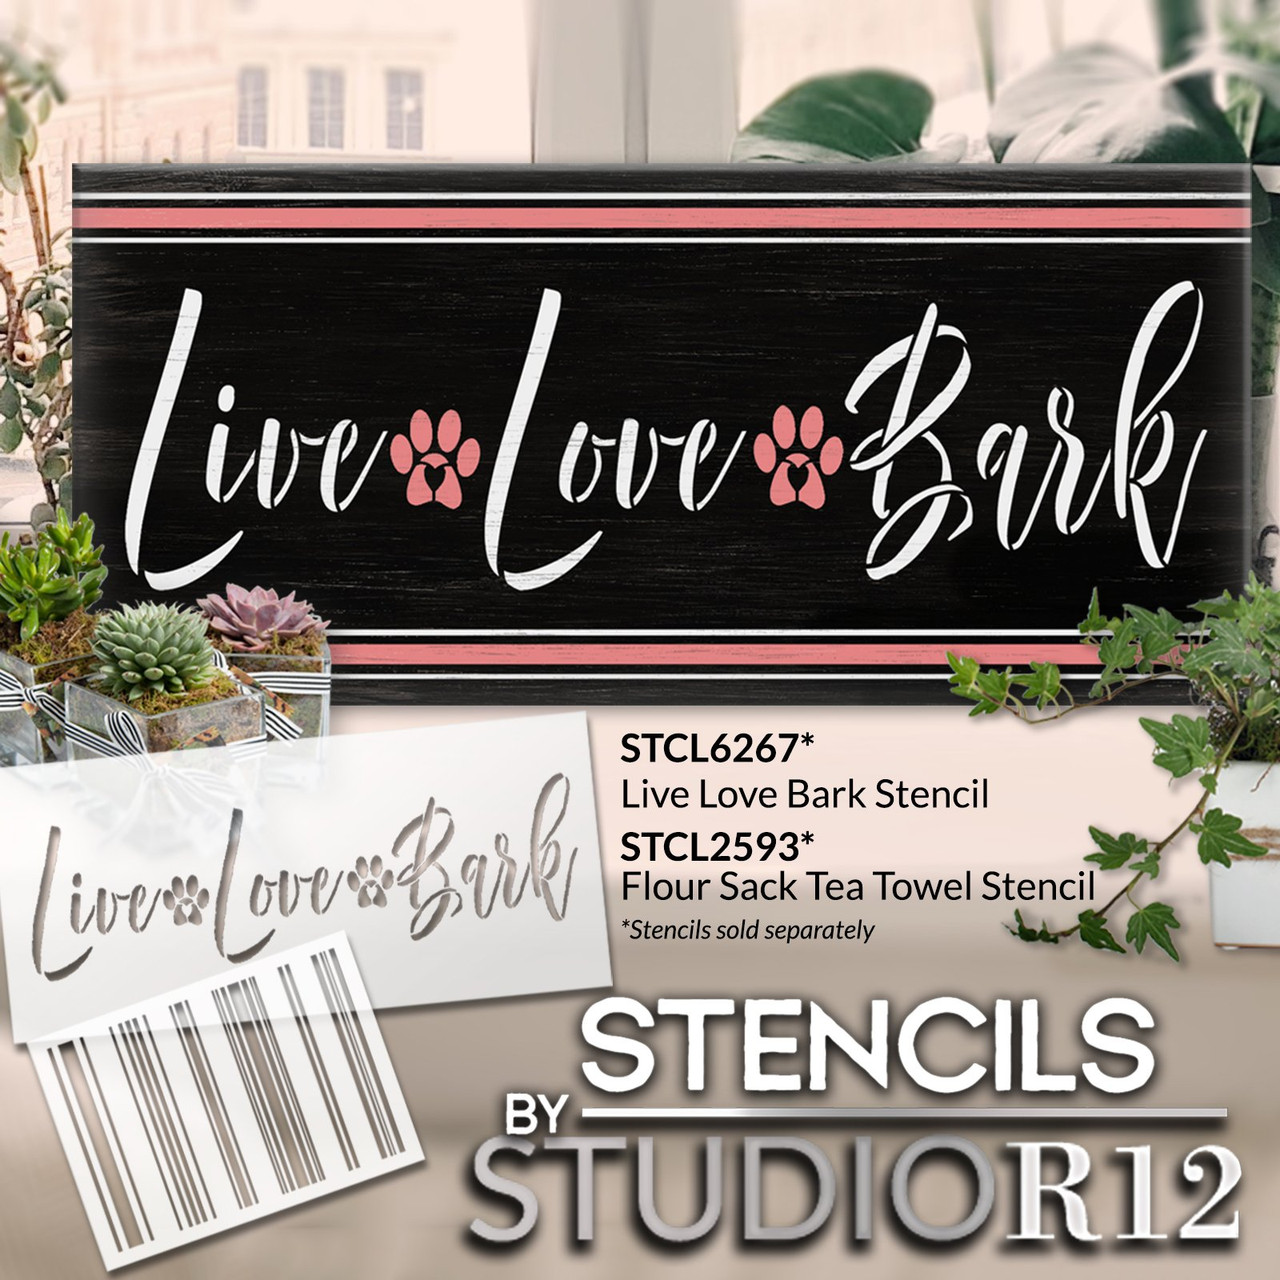 Live Love Bark Stencil by StudioR12 | Craft DIY Pet & Animal Home Decor | Paint Wood Sign | Reusable Mylar Template | Select Size